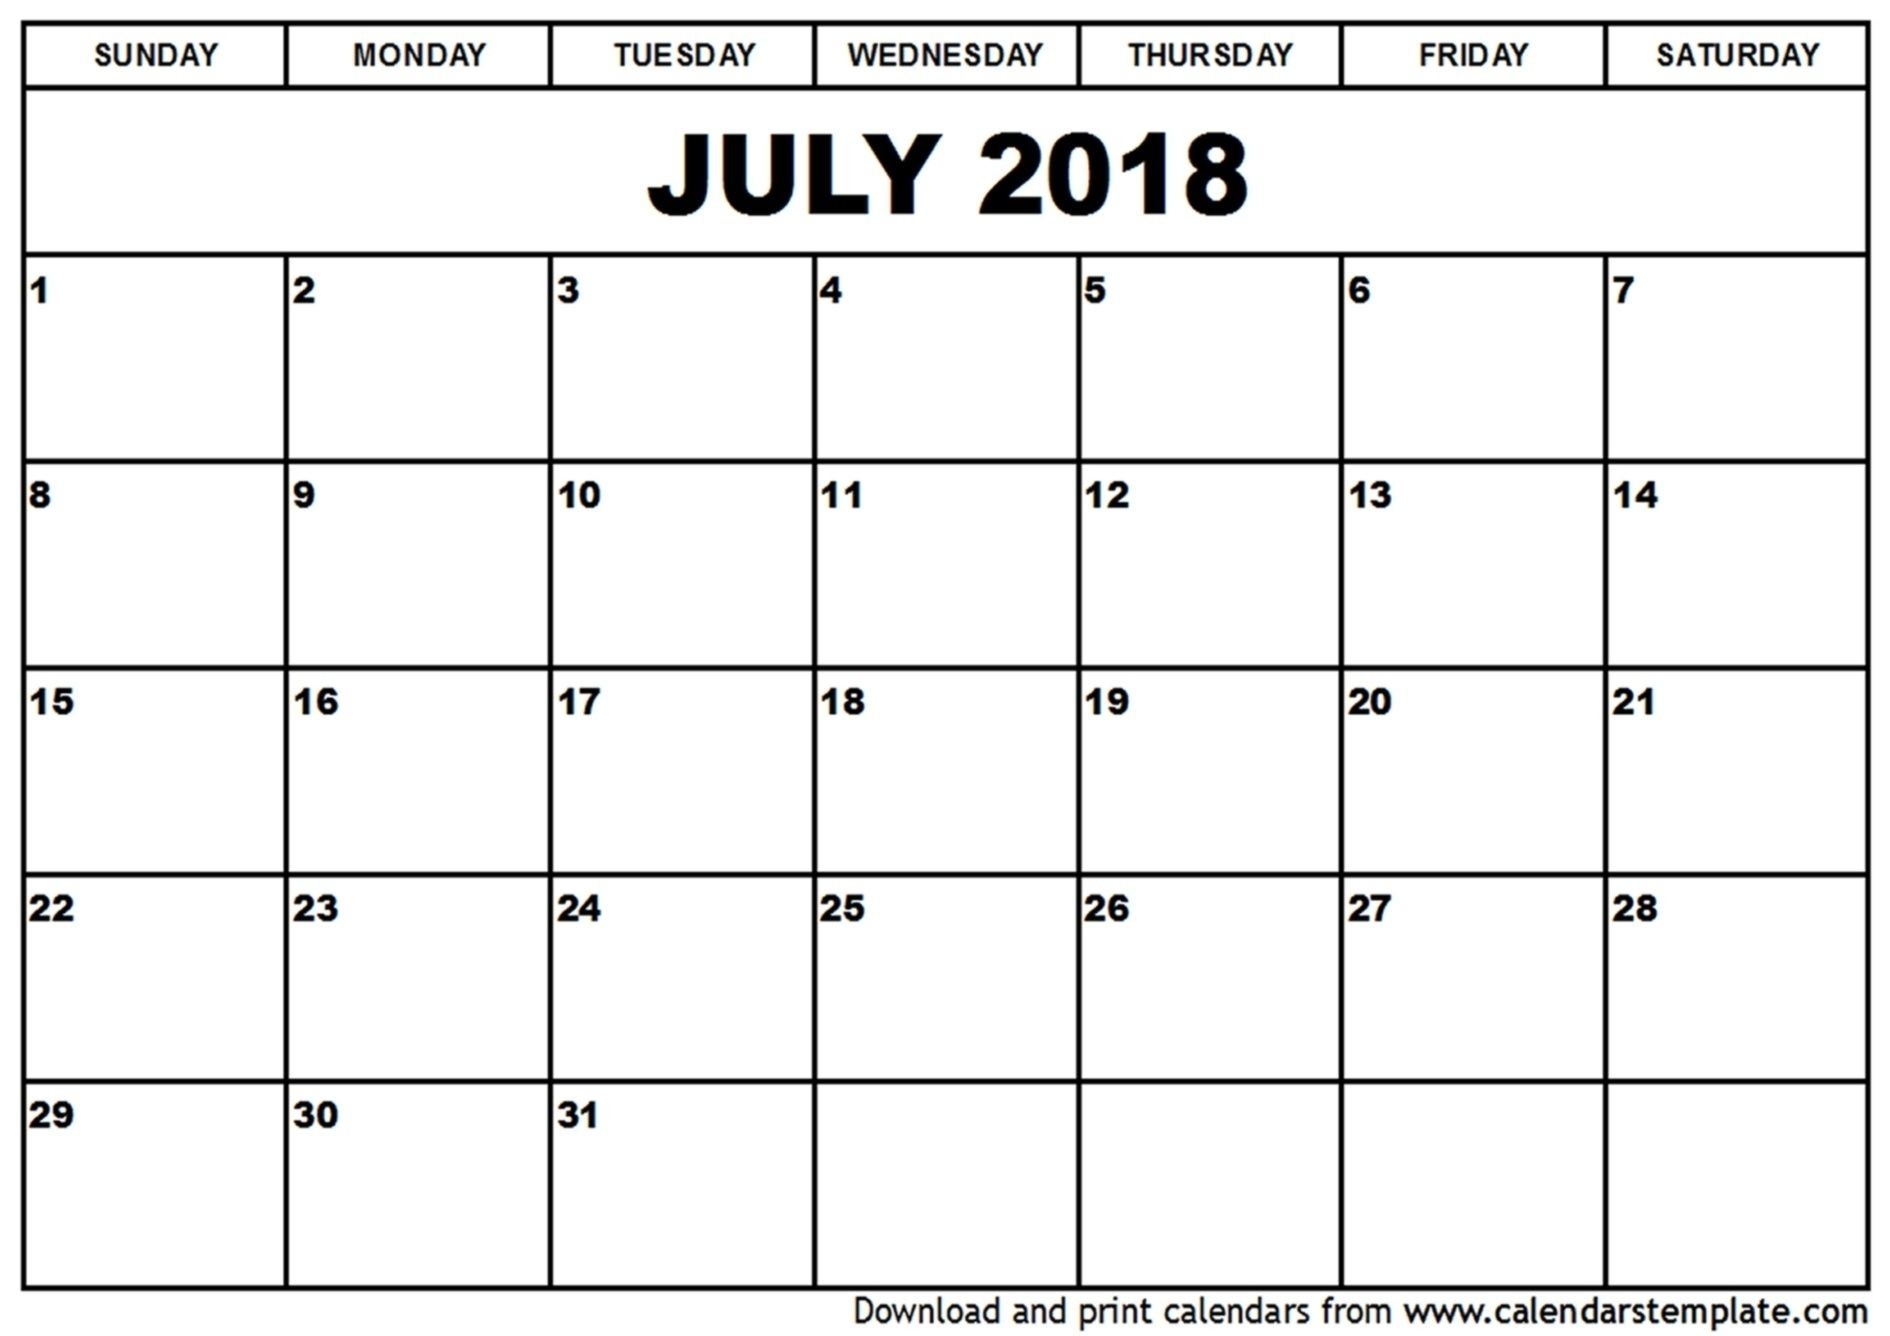 Free Printable 4X6 Monthly Calendar | Blank Monthly Calendar-4X6 Printable 2021 Calendar